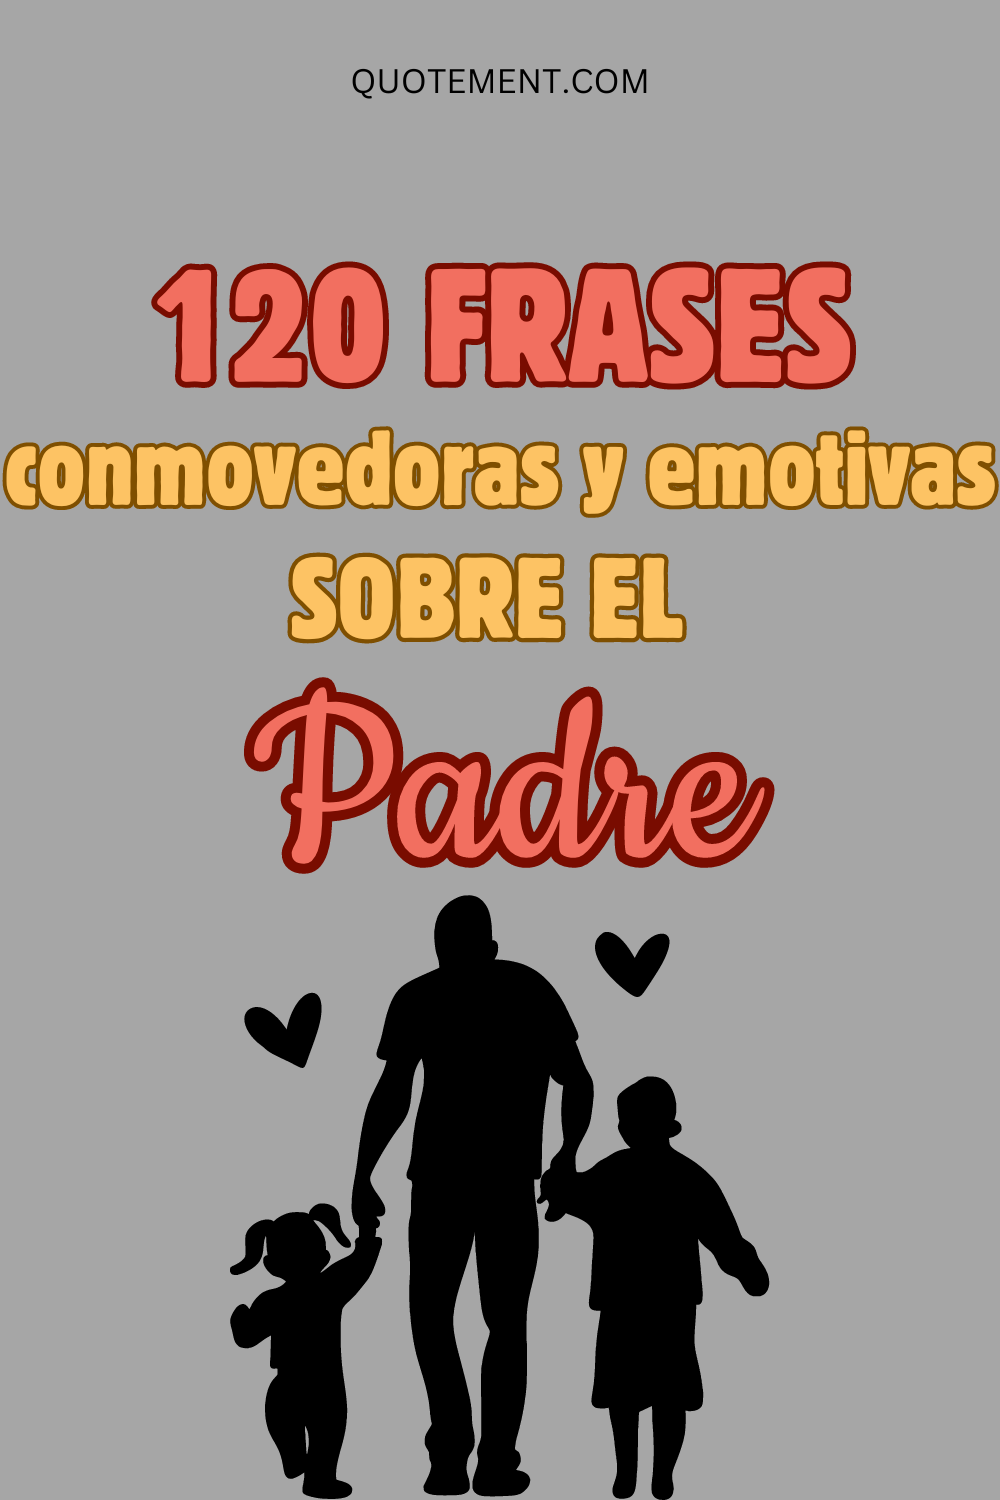 120 frases emotivas para compartir con tu querido padre